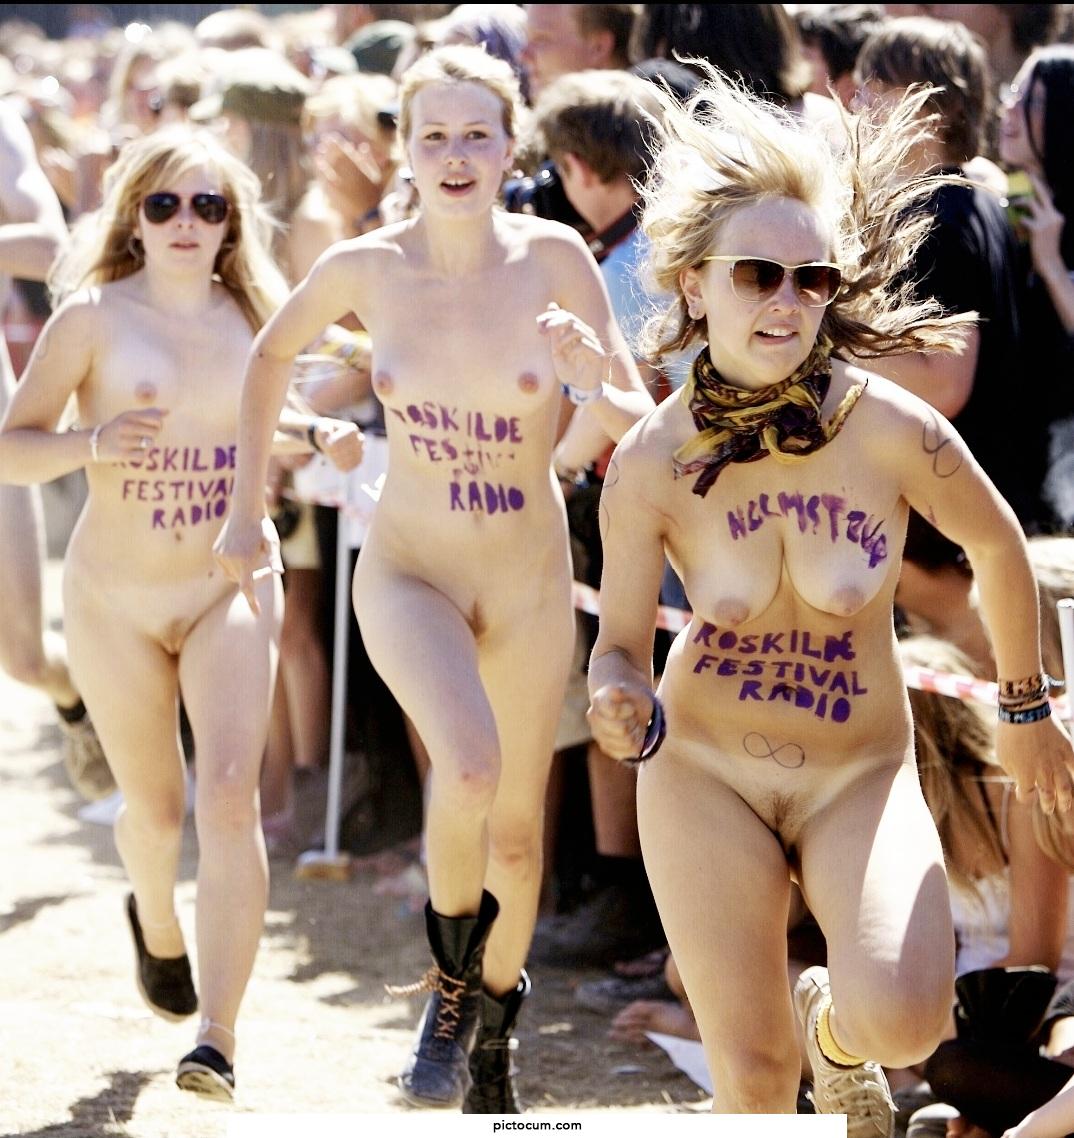 Roskilde festival nude run